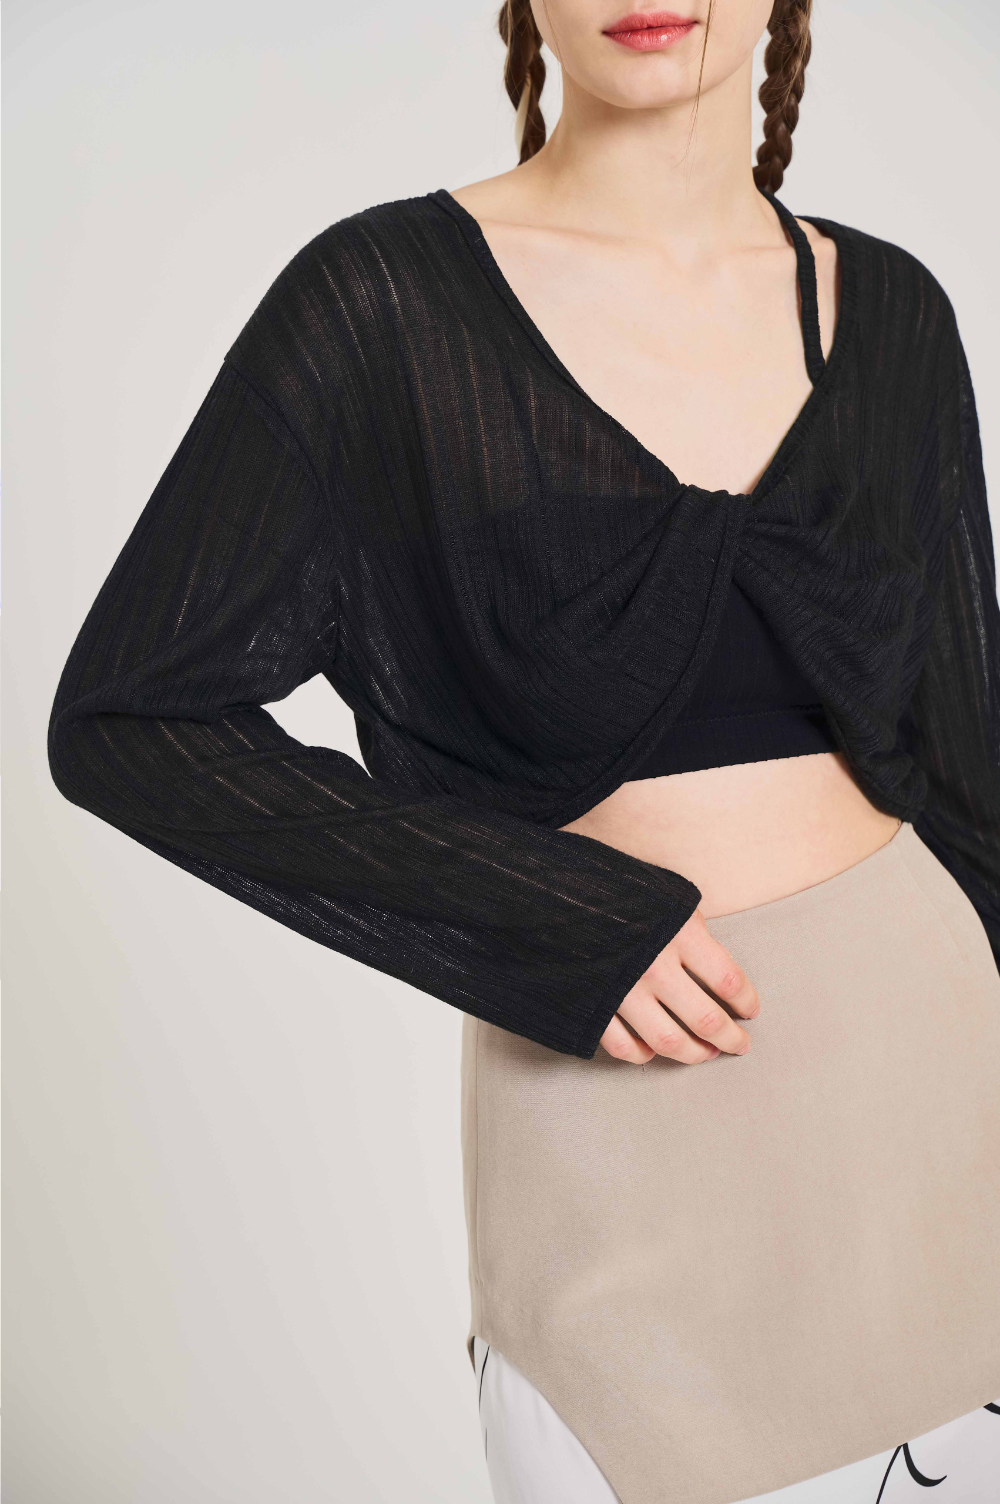 blouse model image-S12L10